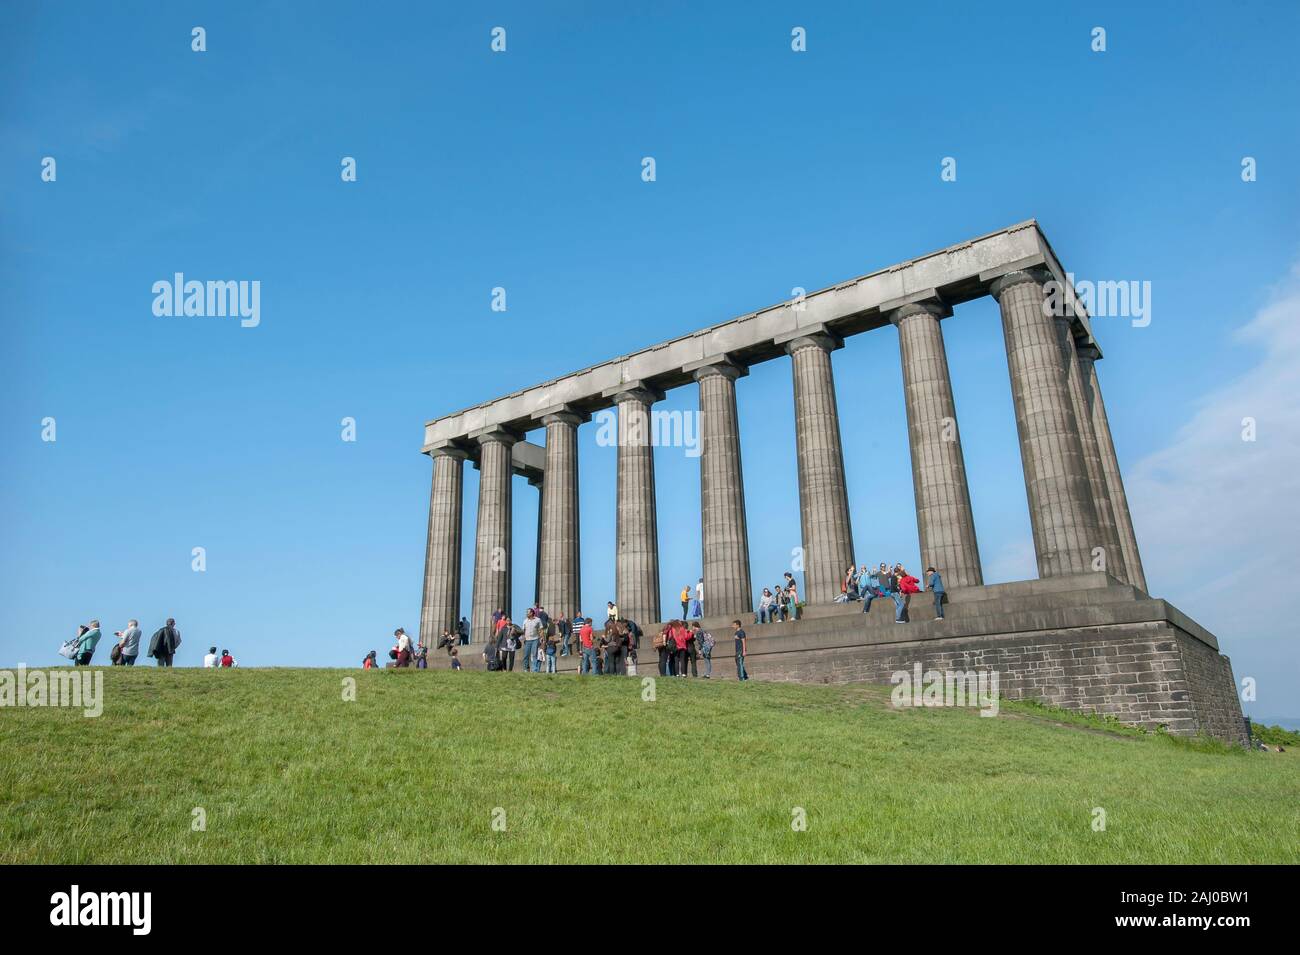 EDINBURGH, SCOTLAND - JUNE 18, 2016 - Tourists gather at the National Monument of Scotland during summer on Calton Hill, Edinburgh, Scotland Stock Photo